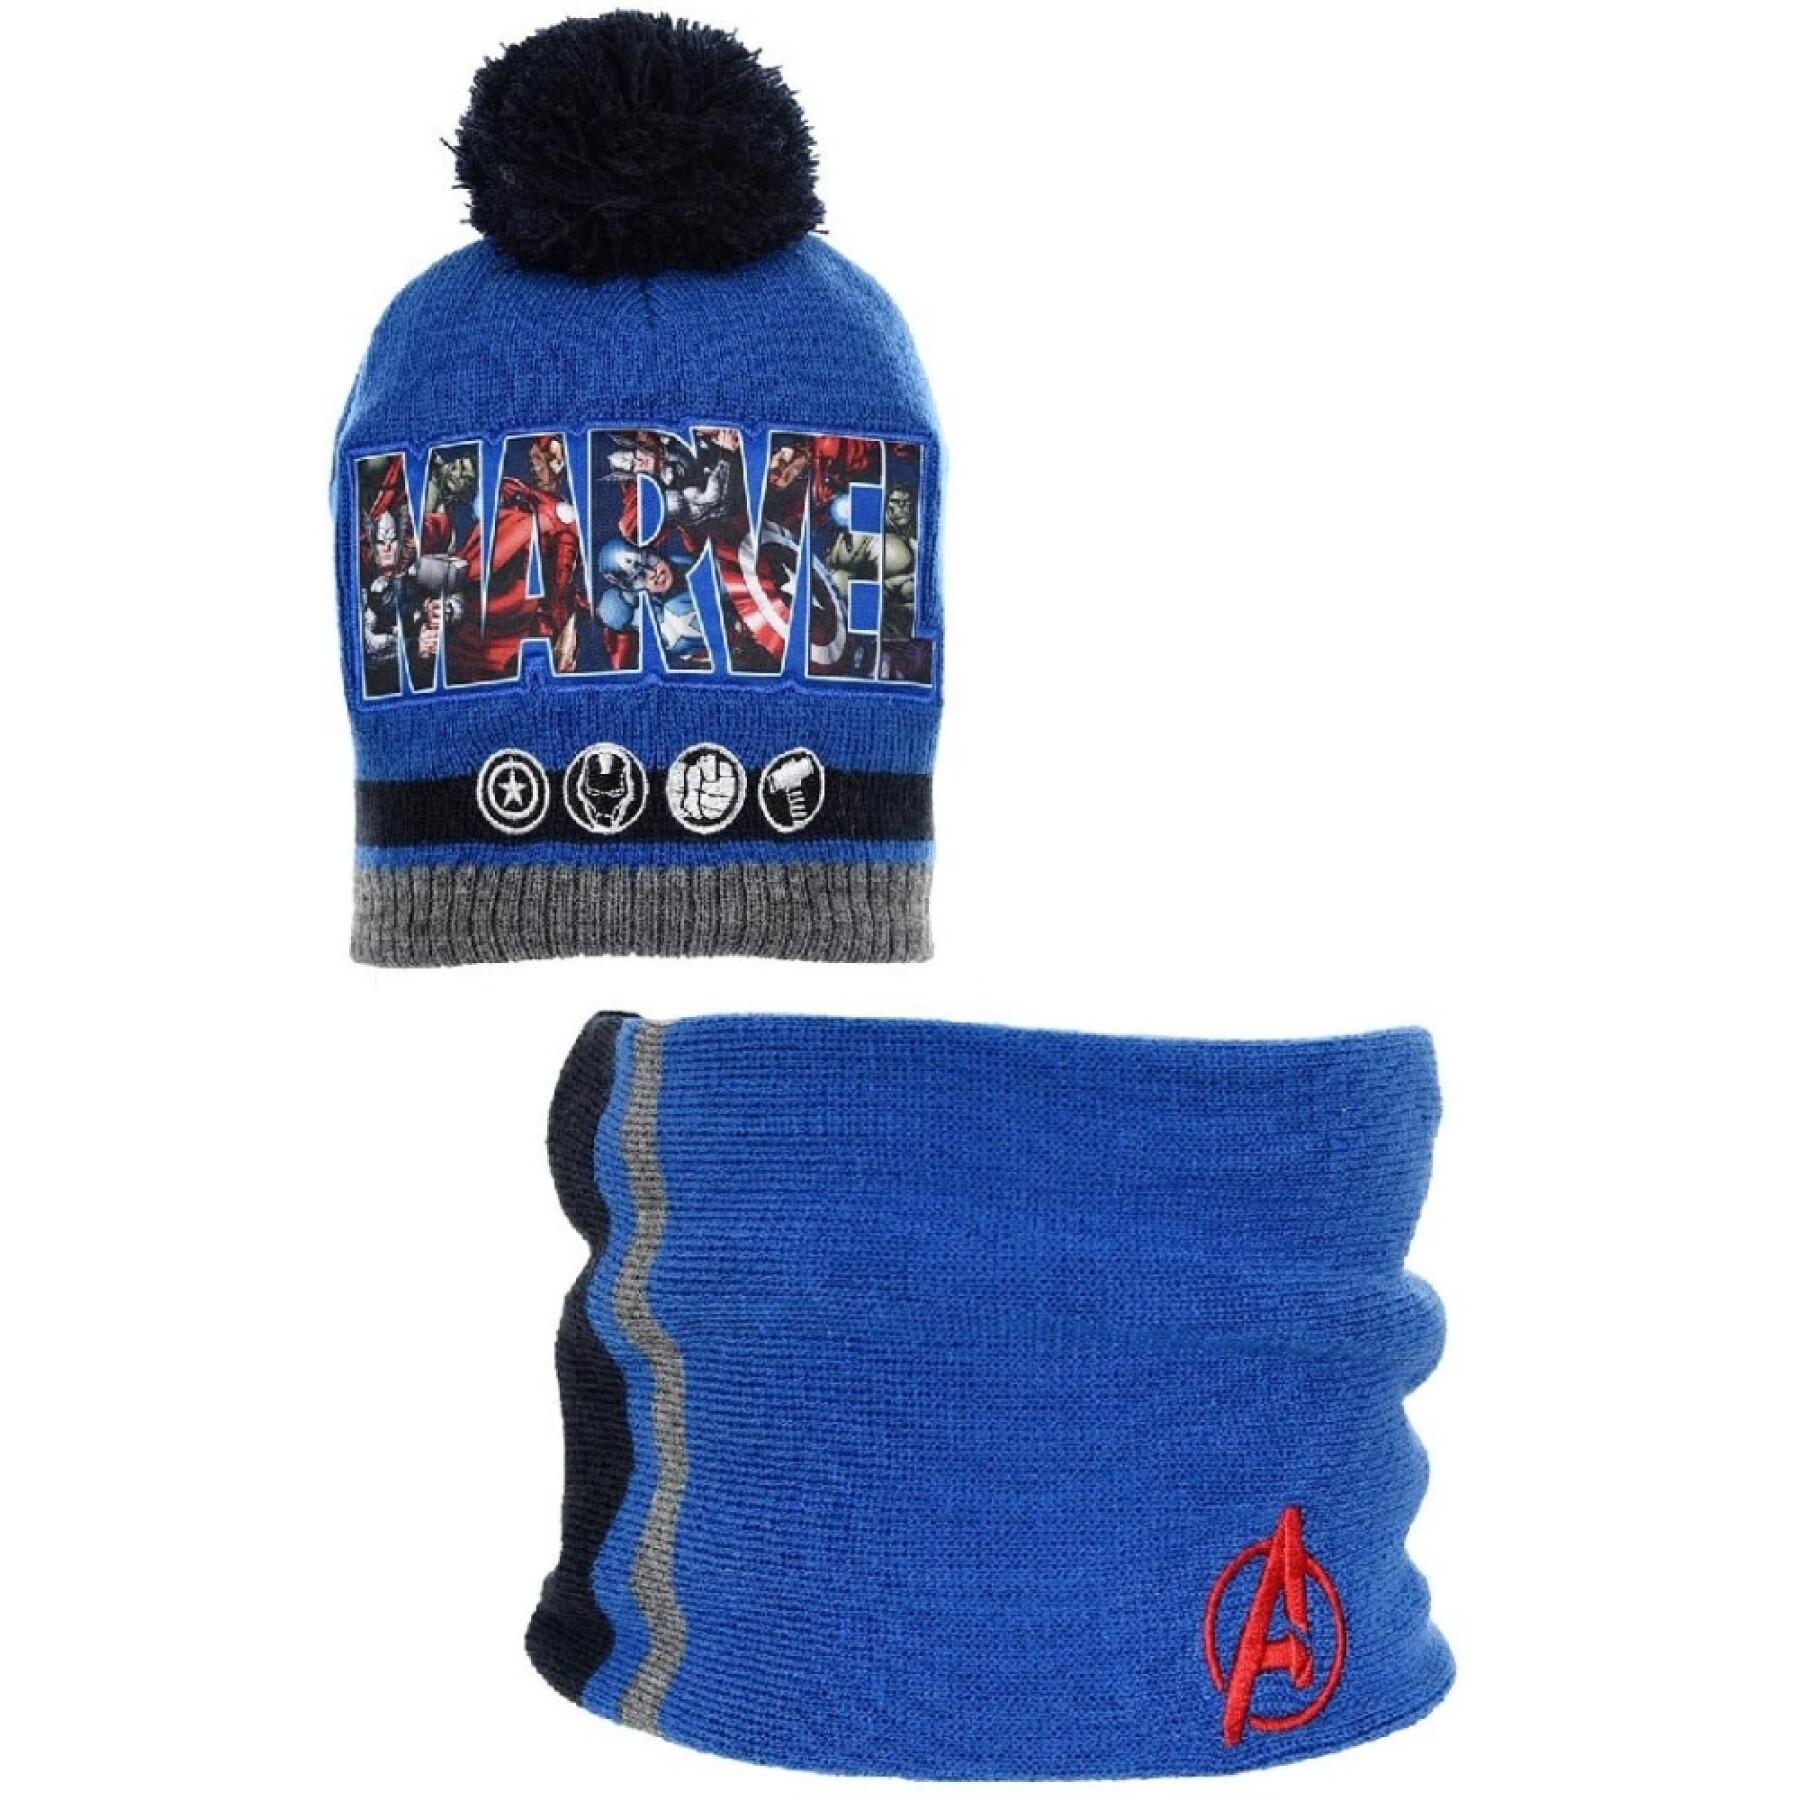 Children's wool and fleece hat and neck warmer set Avengers